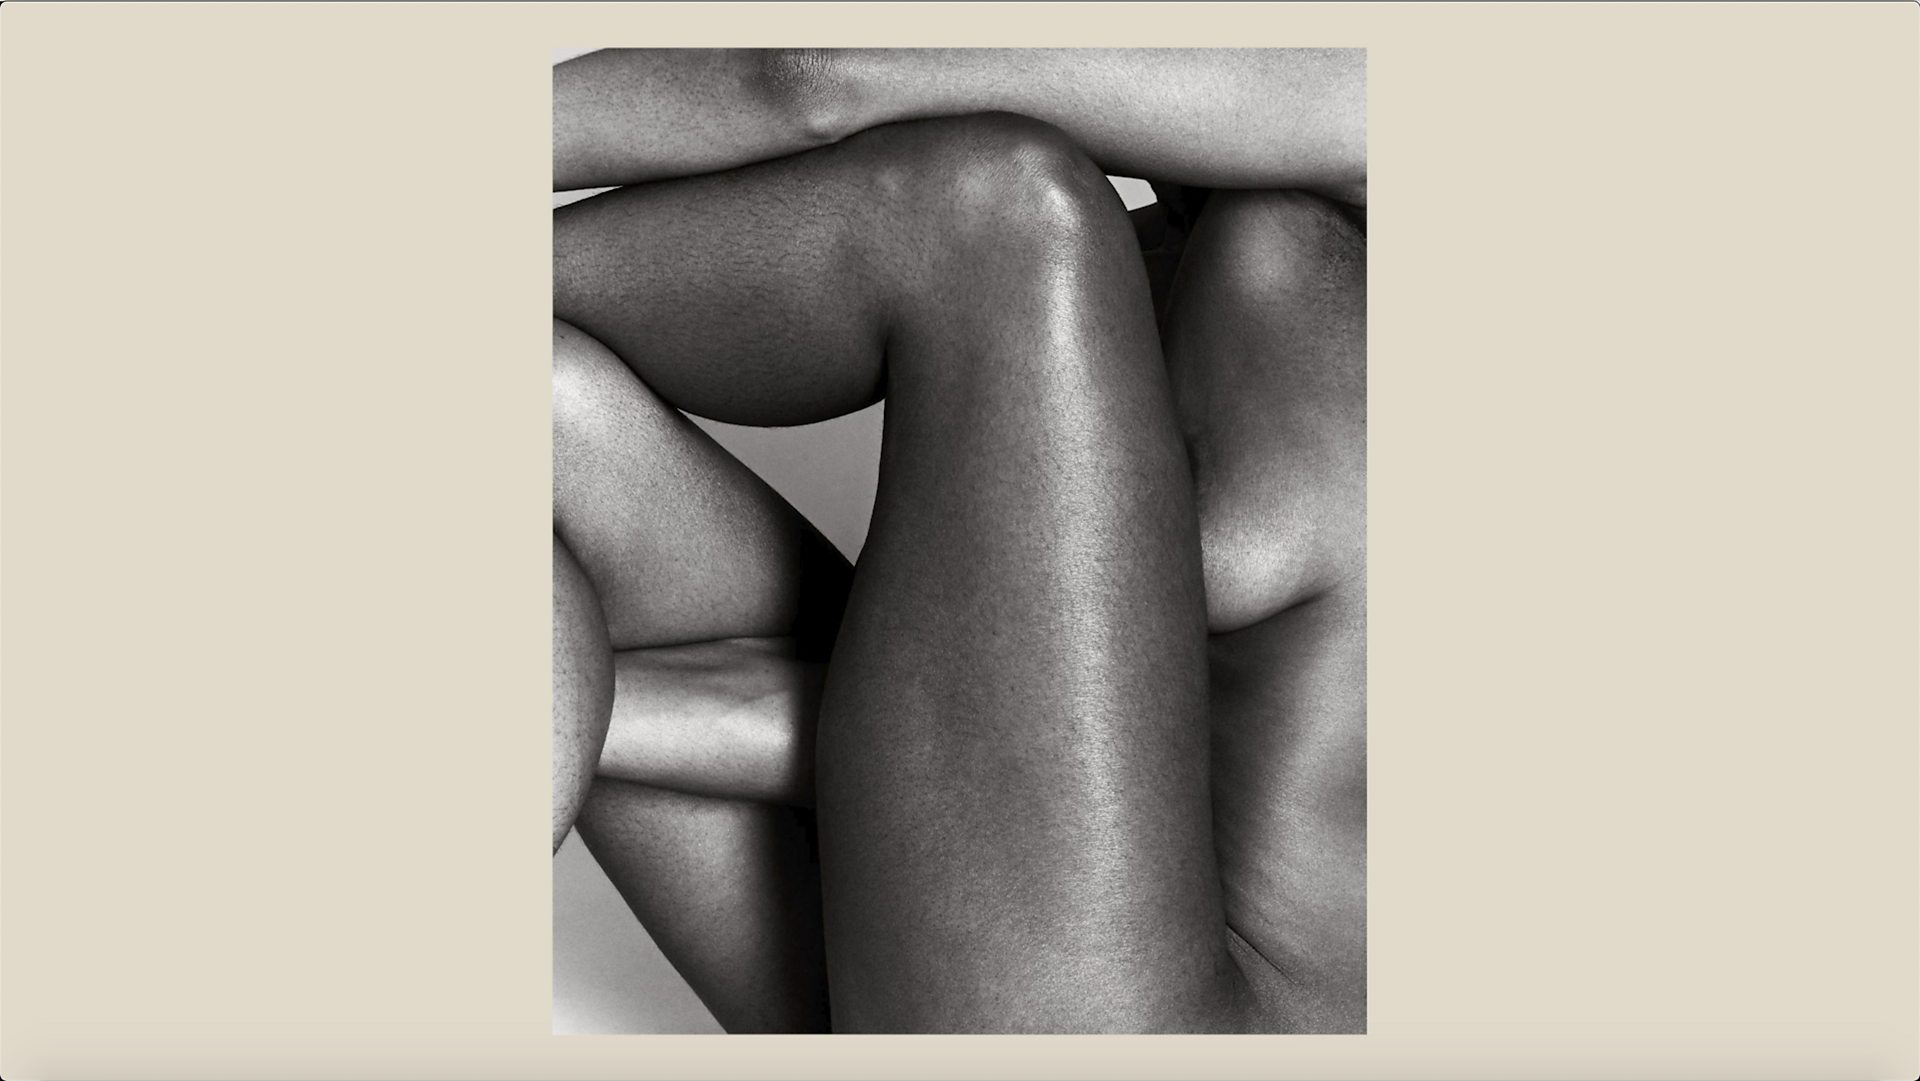 A Swedish photographer's radical take on nudity